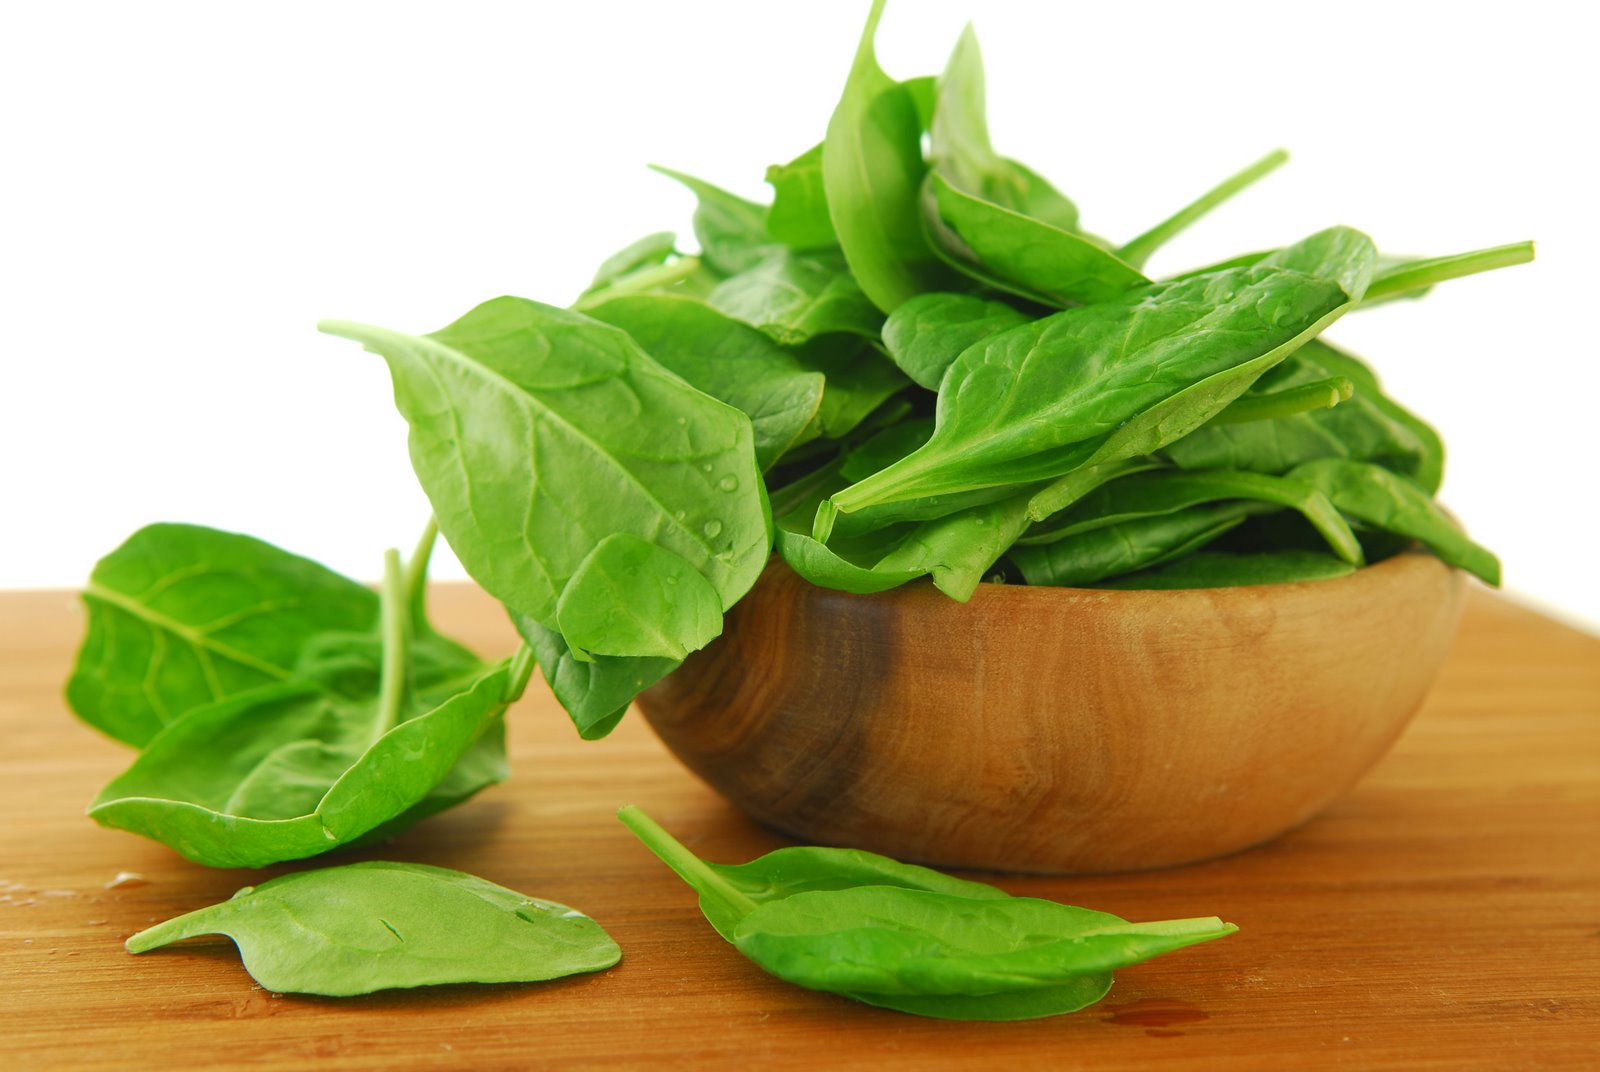 Fresh spinach iin a wooden bowl on a cutting board